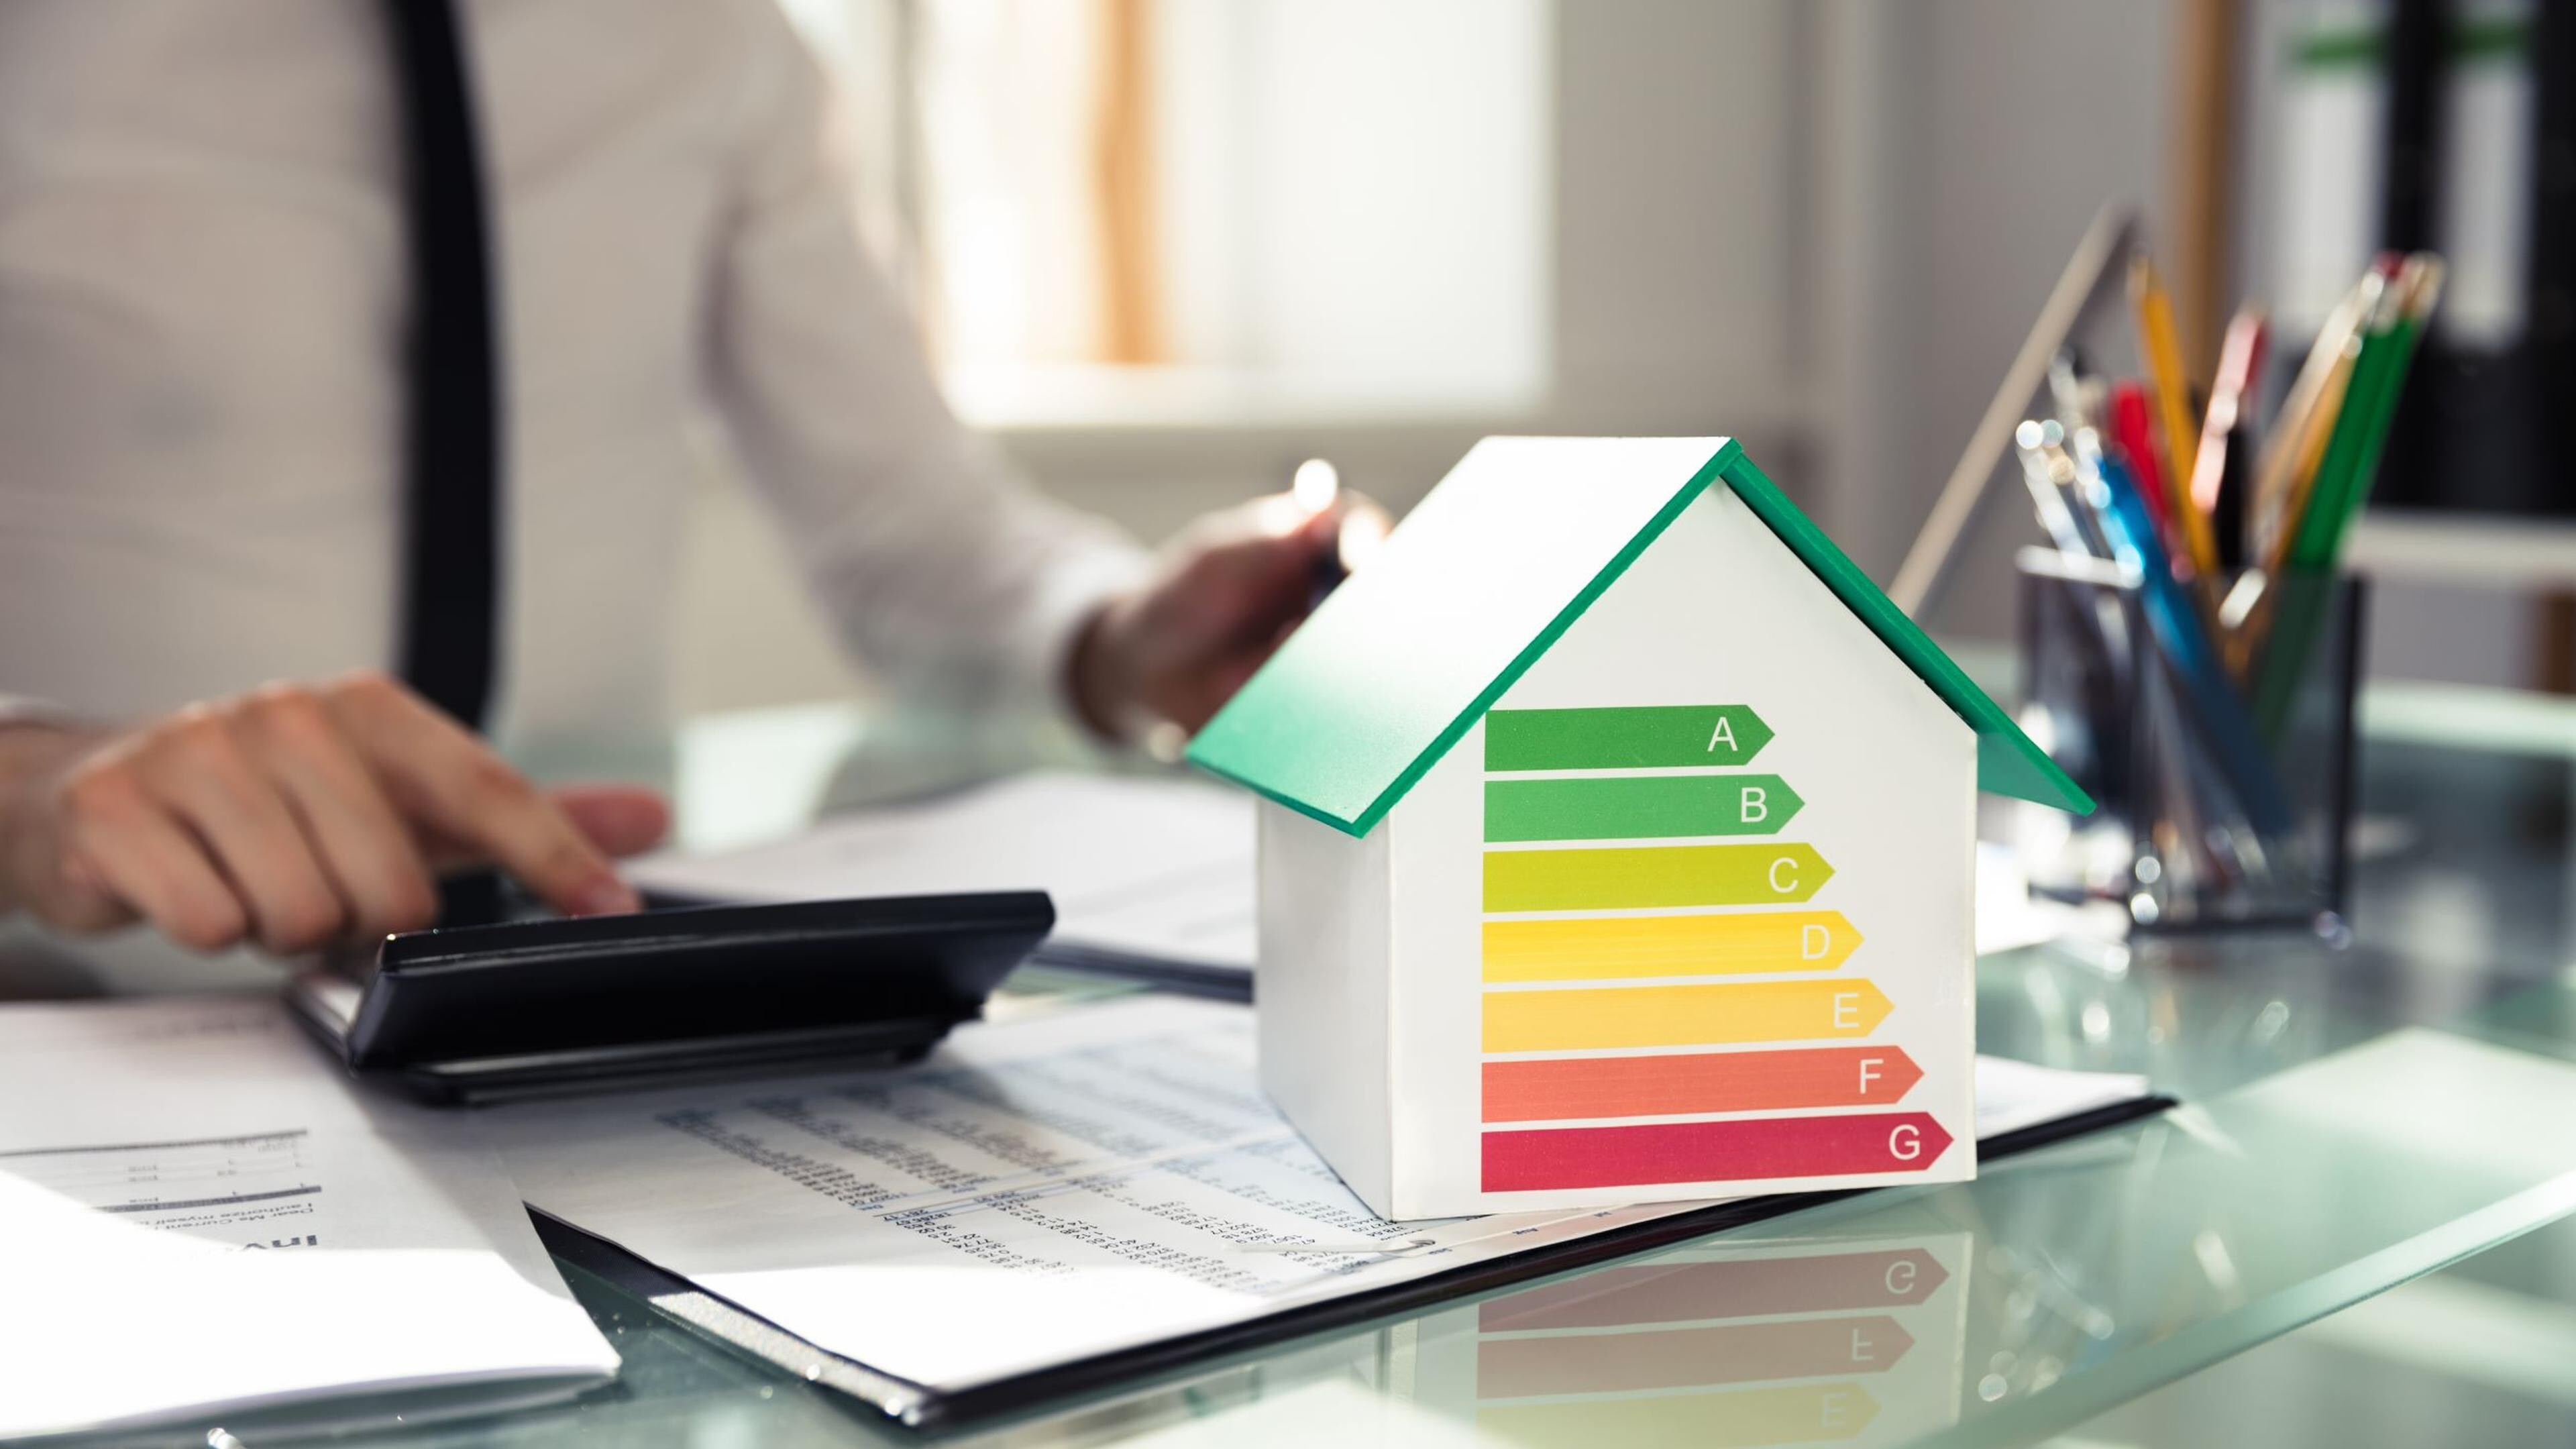 More information about "Εγκρίθηκε η νέα αναθεωρημένη οδηγία για την ενεργειακή απόδοση των κτιρίων (OEAK)"